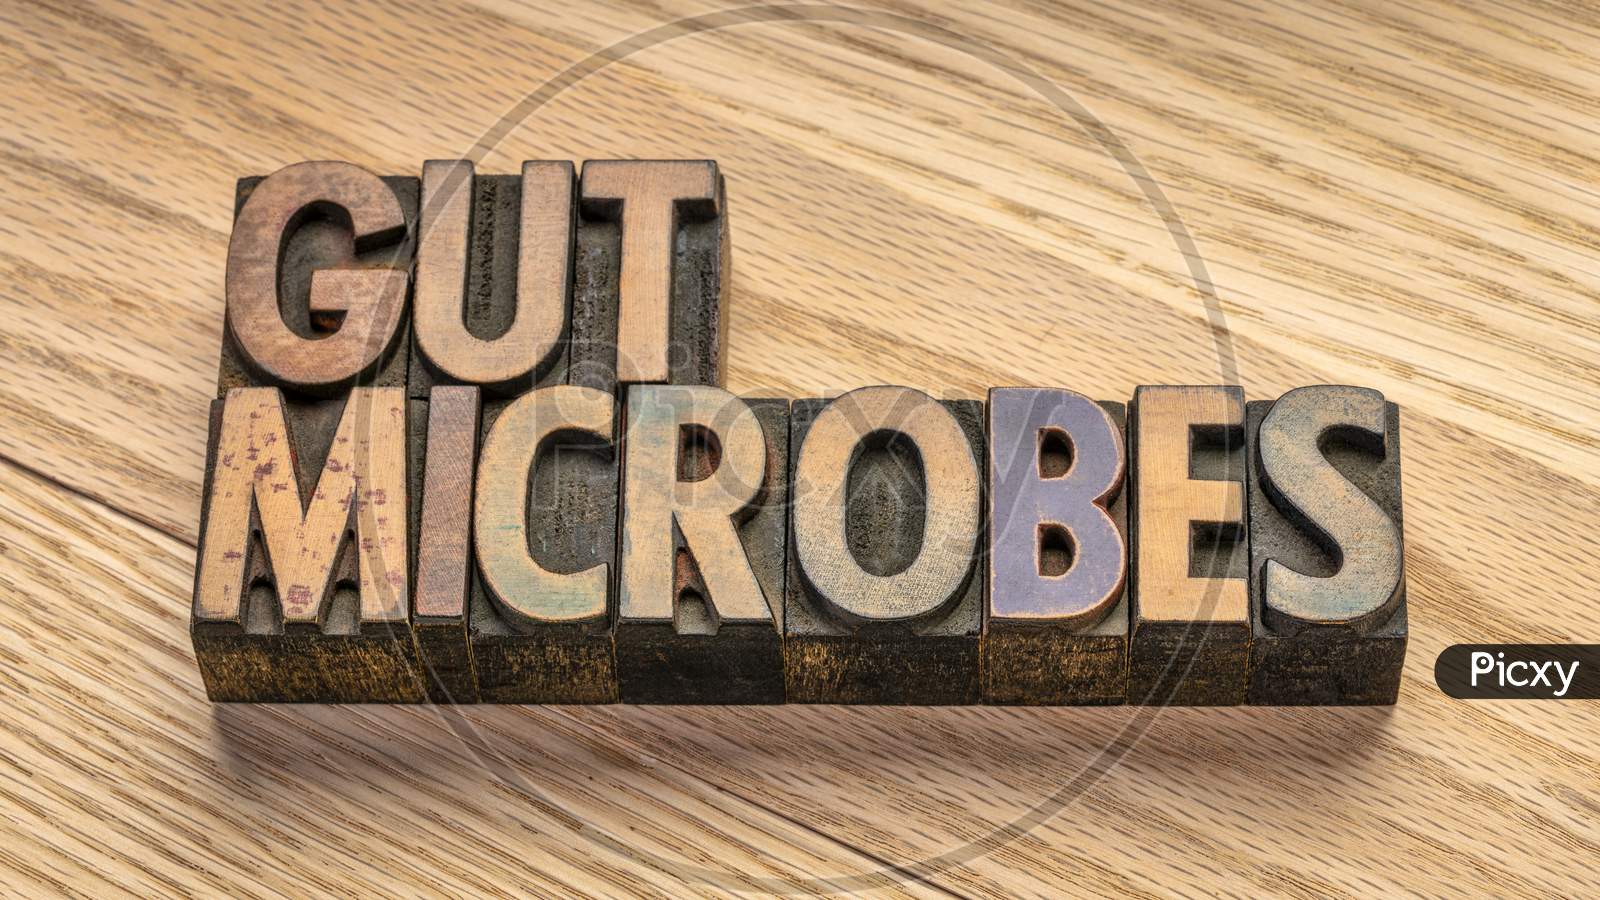 Gut Microbes In Vintage Letterpress Wood Type Blocks Against Grained Wood Planks, Digestive Health Concept